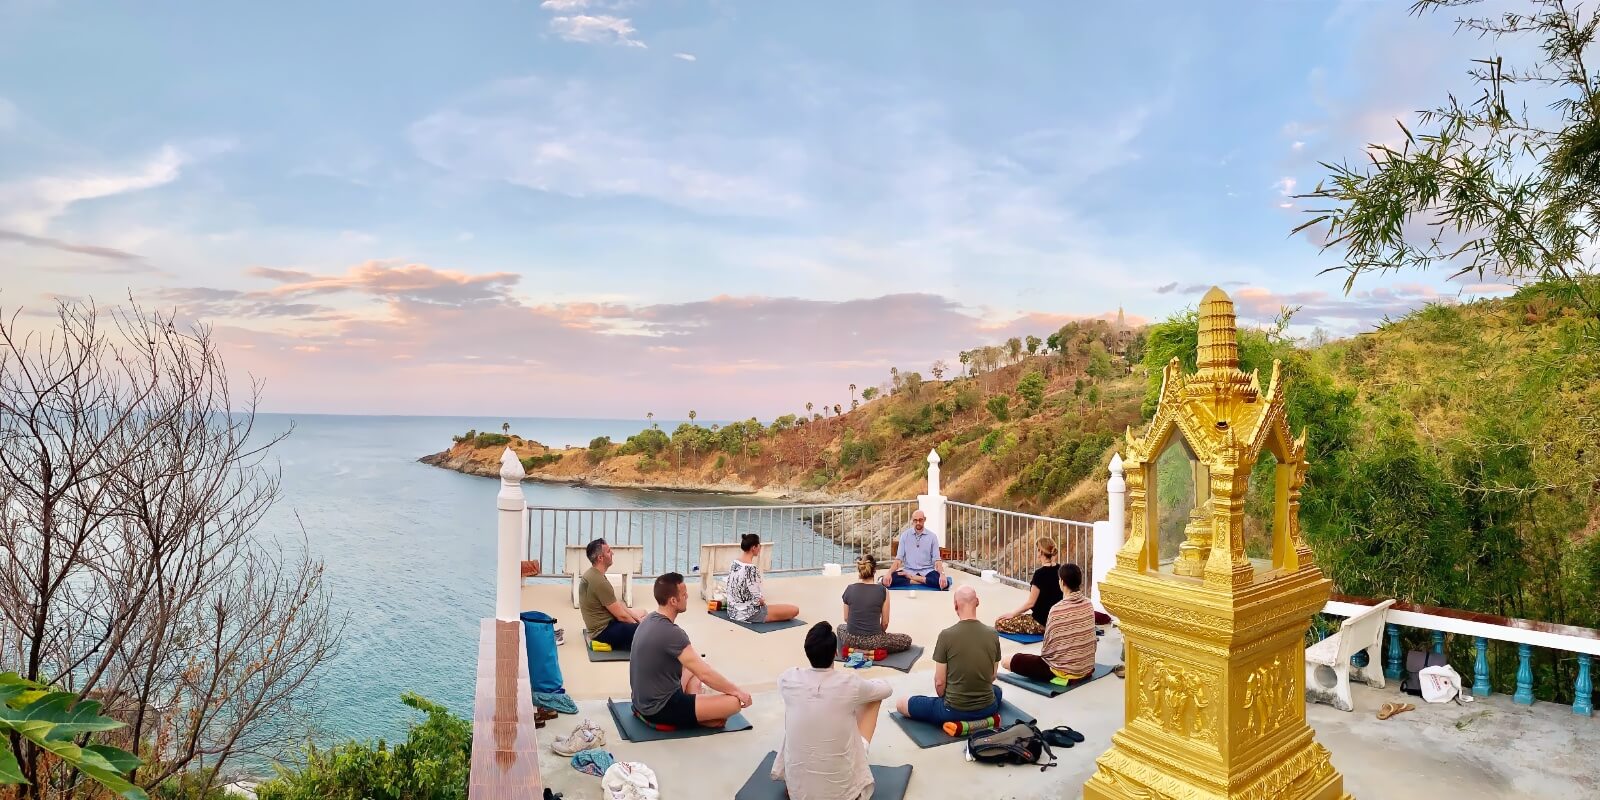 Nine people meditate together on a platform above the ocean, at Promthep Cape in Phuket during a meditation retreat.